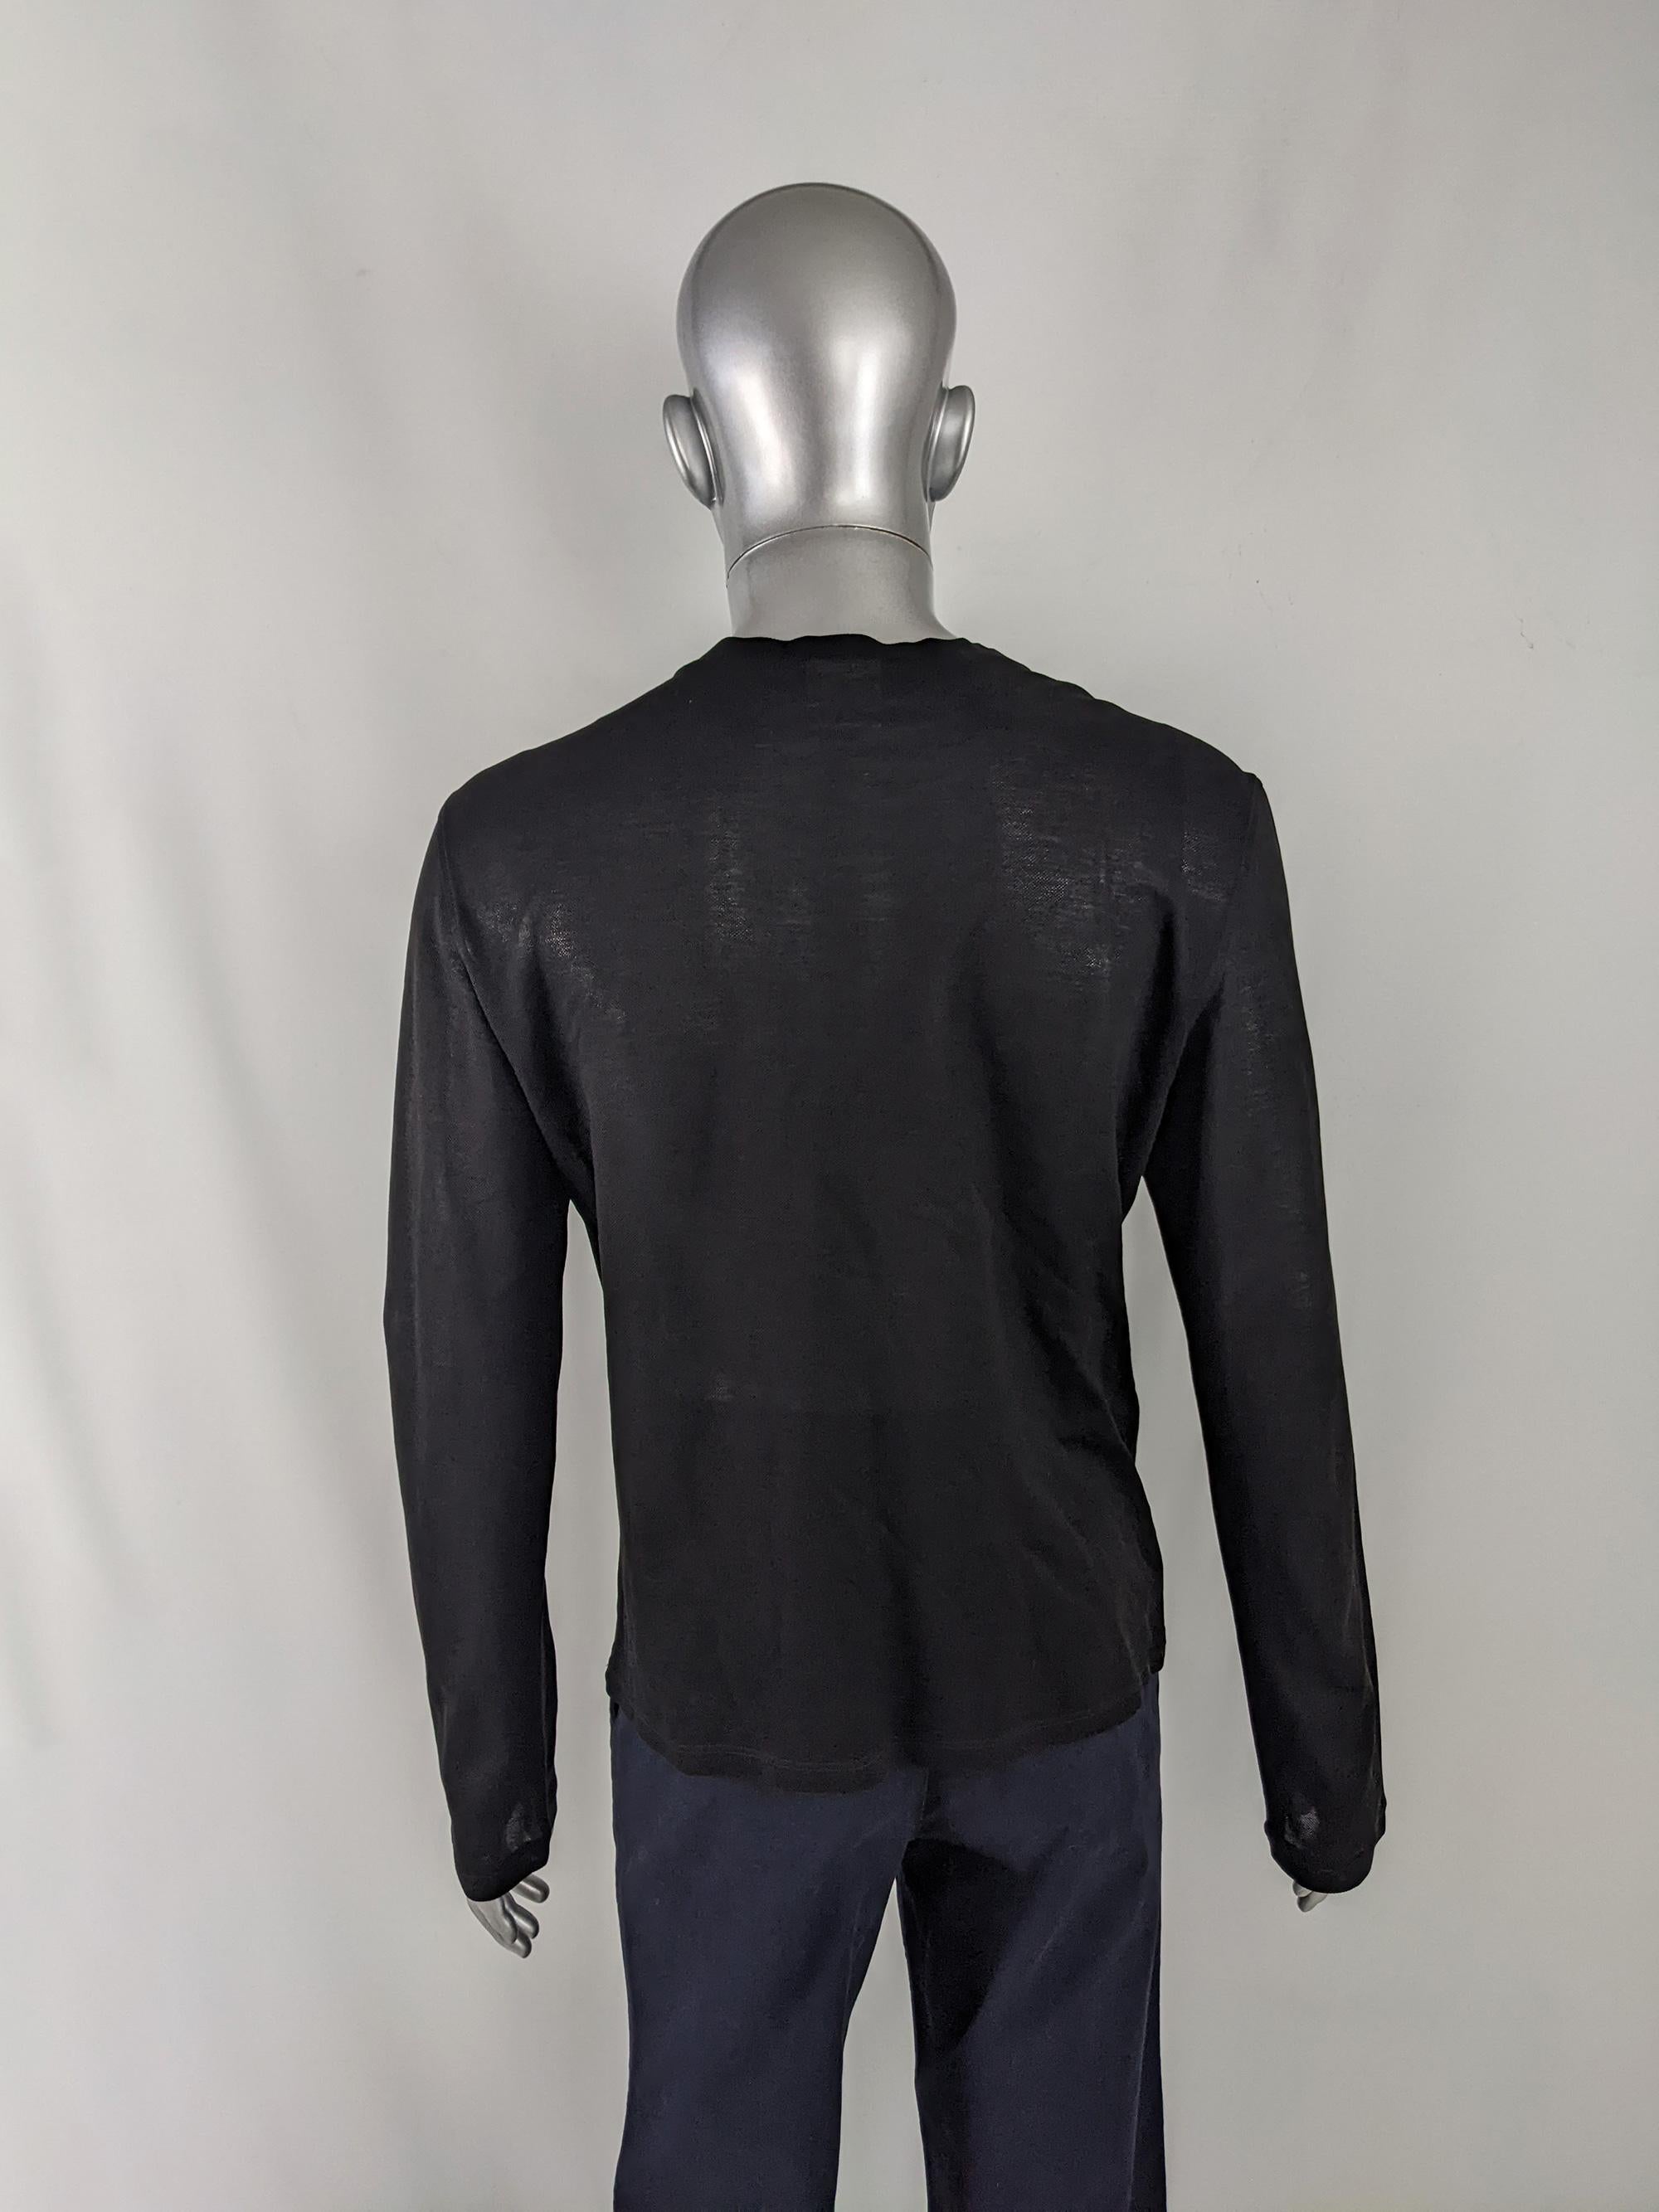 Versus Versace Vintage 2000s Black Mesh Shirt Long Sleeve Top Y2K Party Shirt For Sale 1